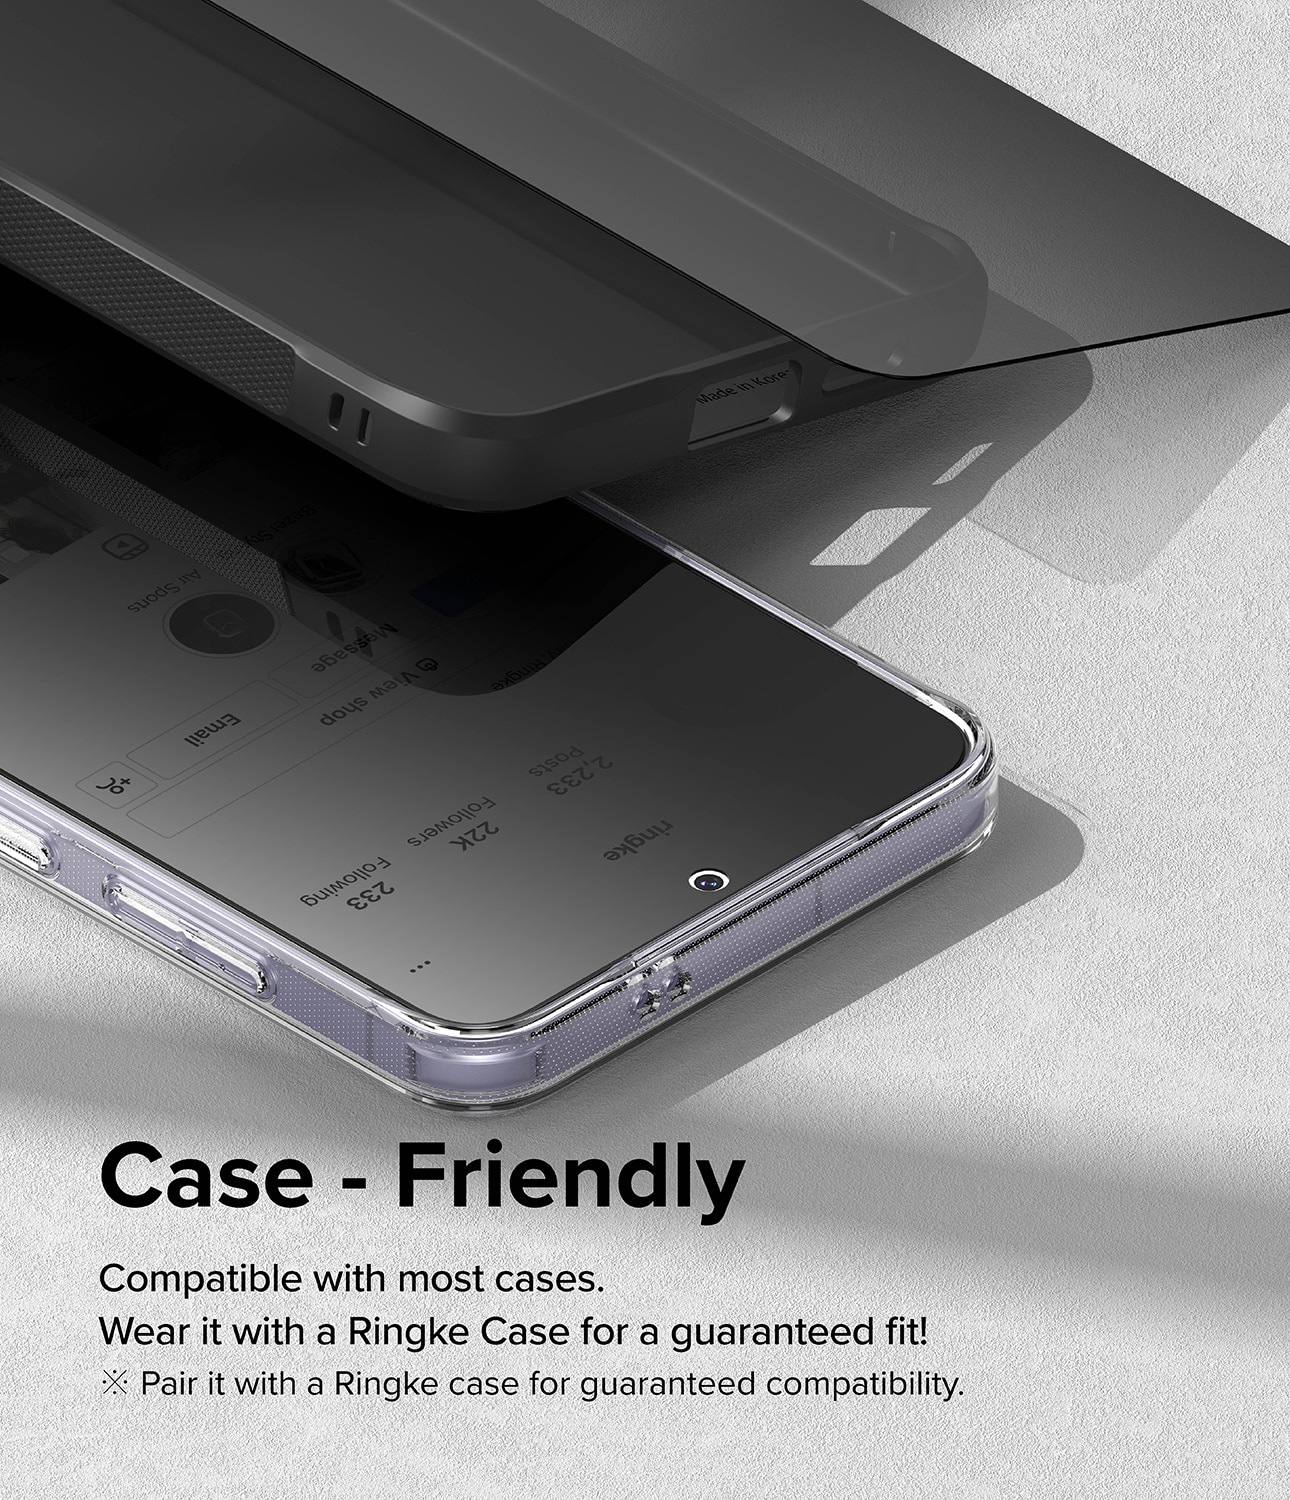 Easy Slide Privacy Glass (2 pezzi) Samsung Galaxy S24 Plus